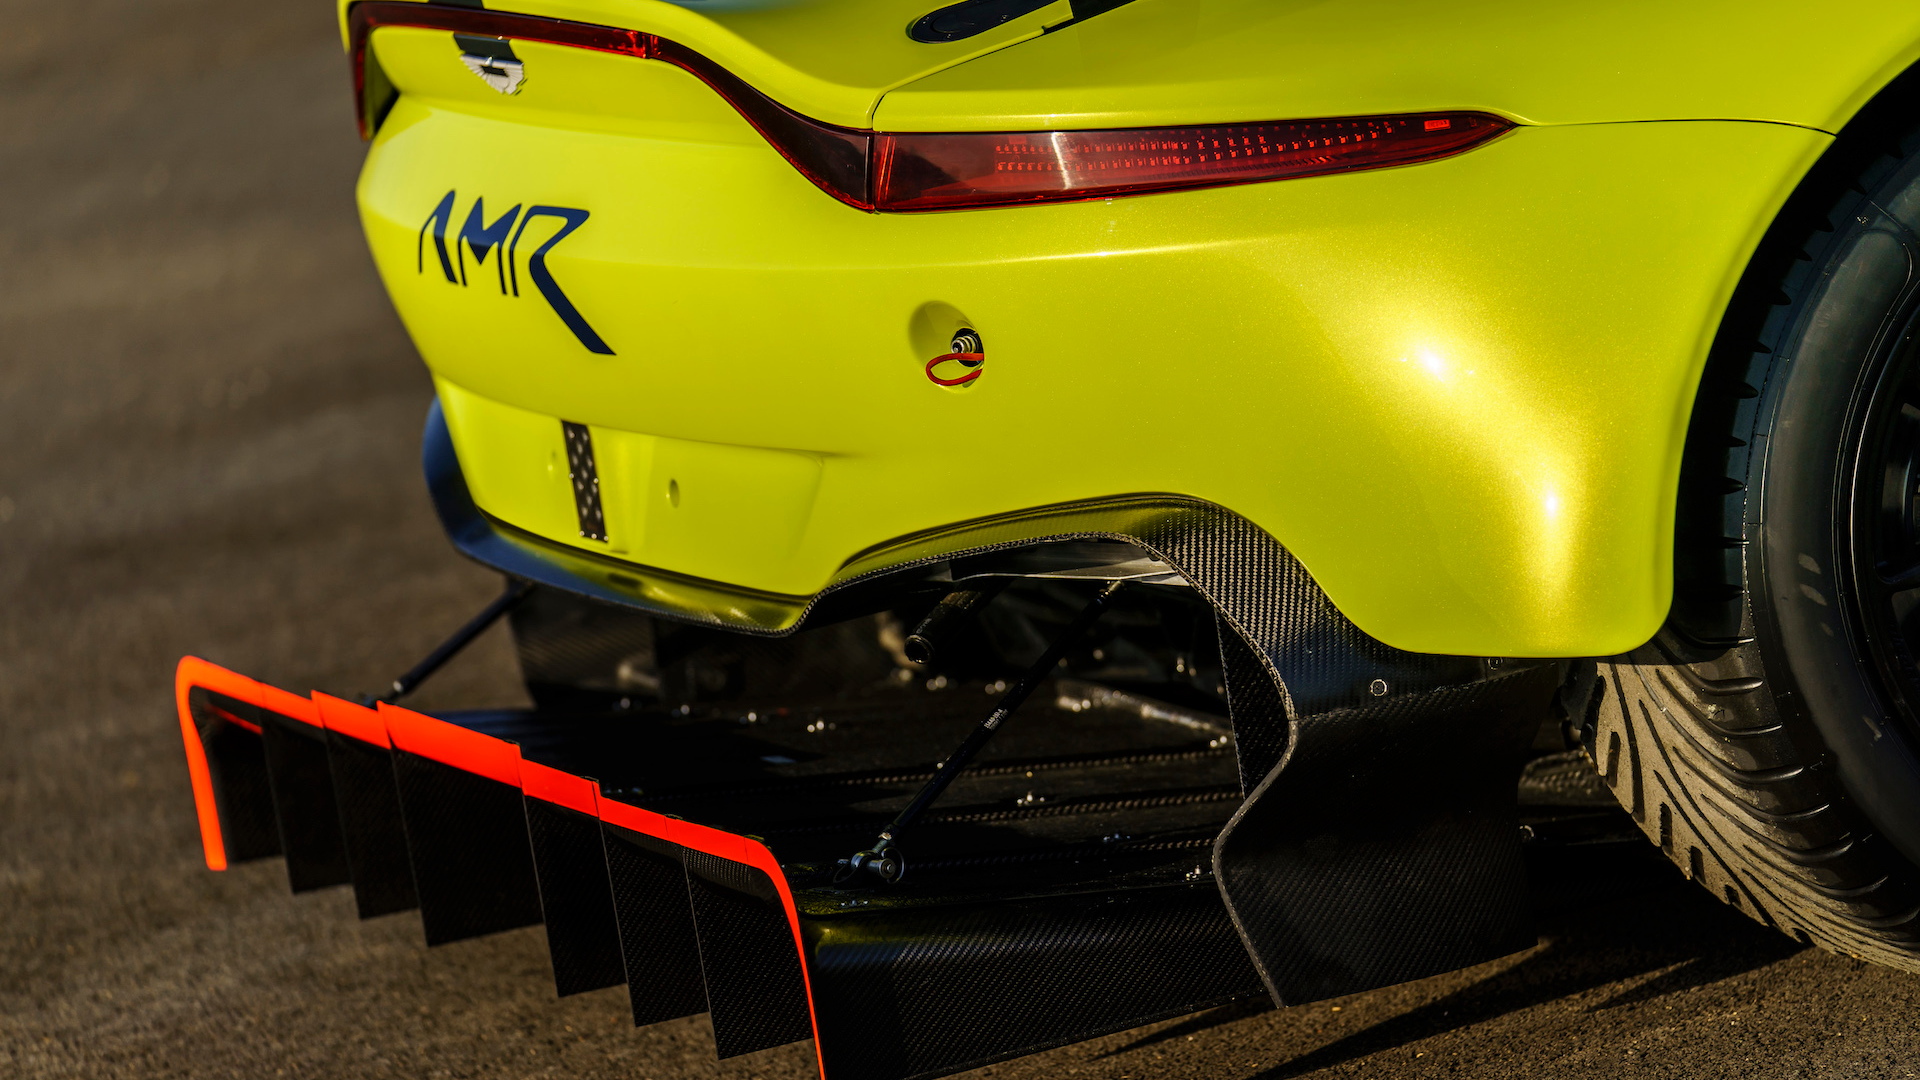 Aston Martin Vantage GTE race car